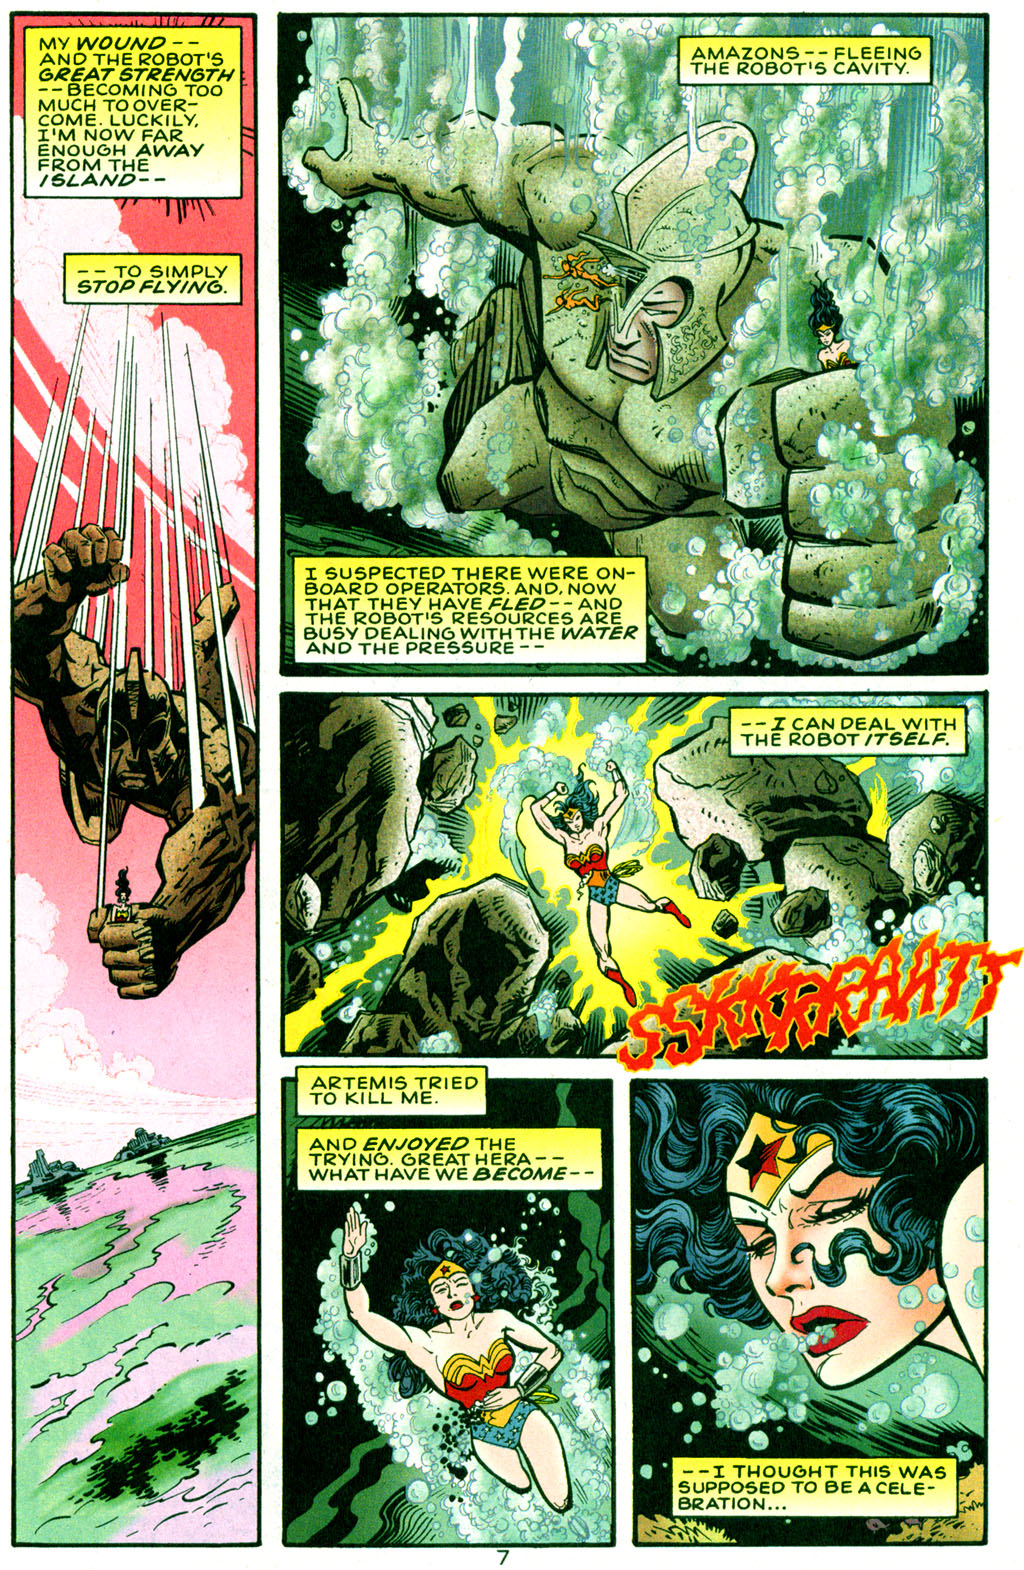 Wonder Woman (1987) 1000000 Page 7